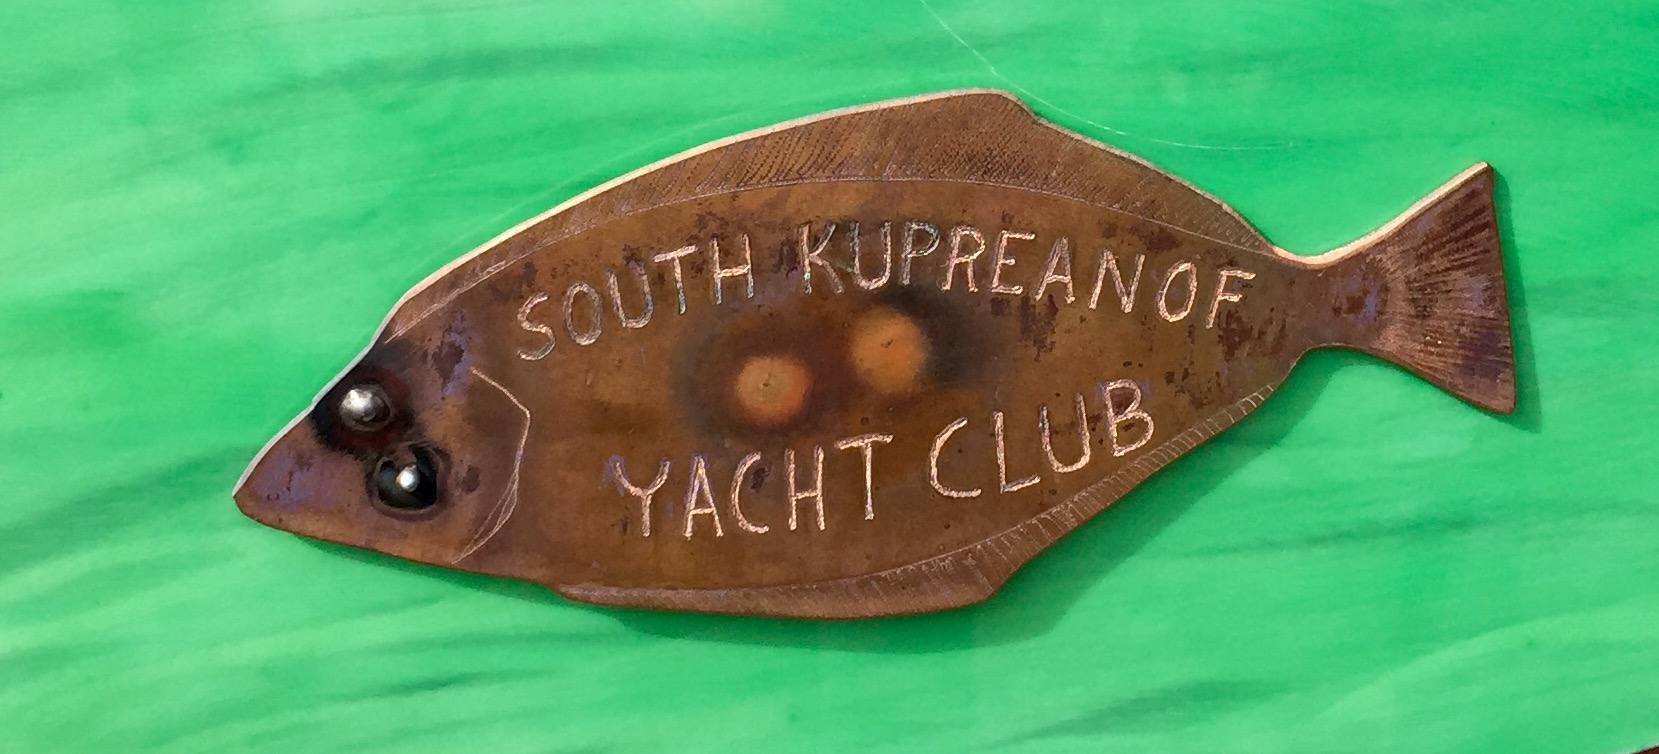 South Kupreanof Yacht Club.jpg